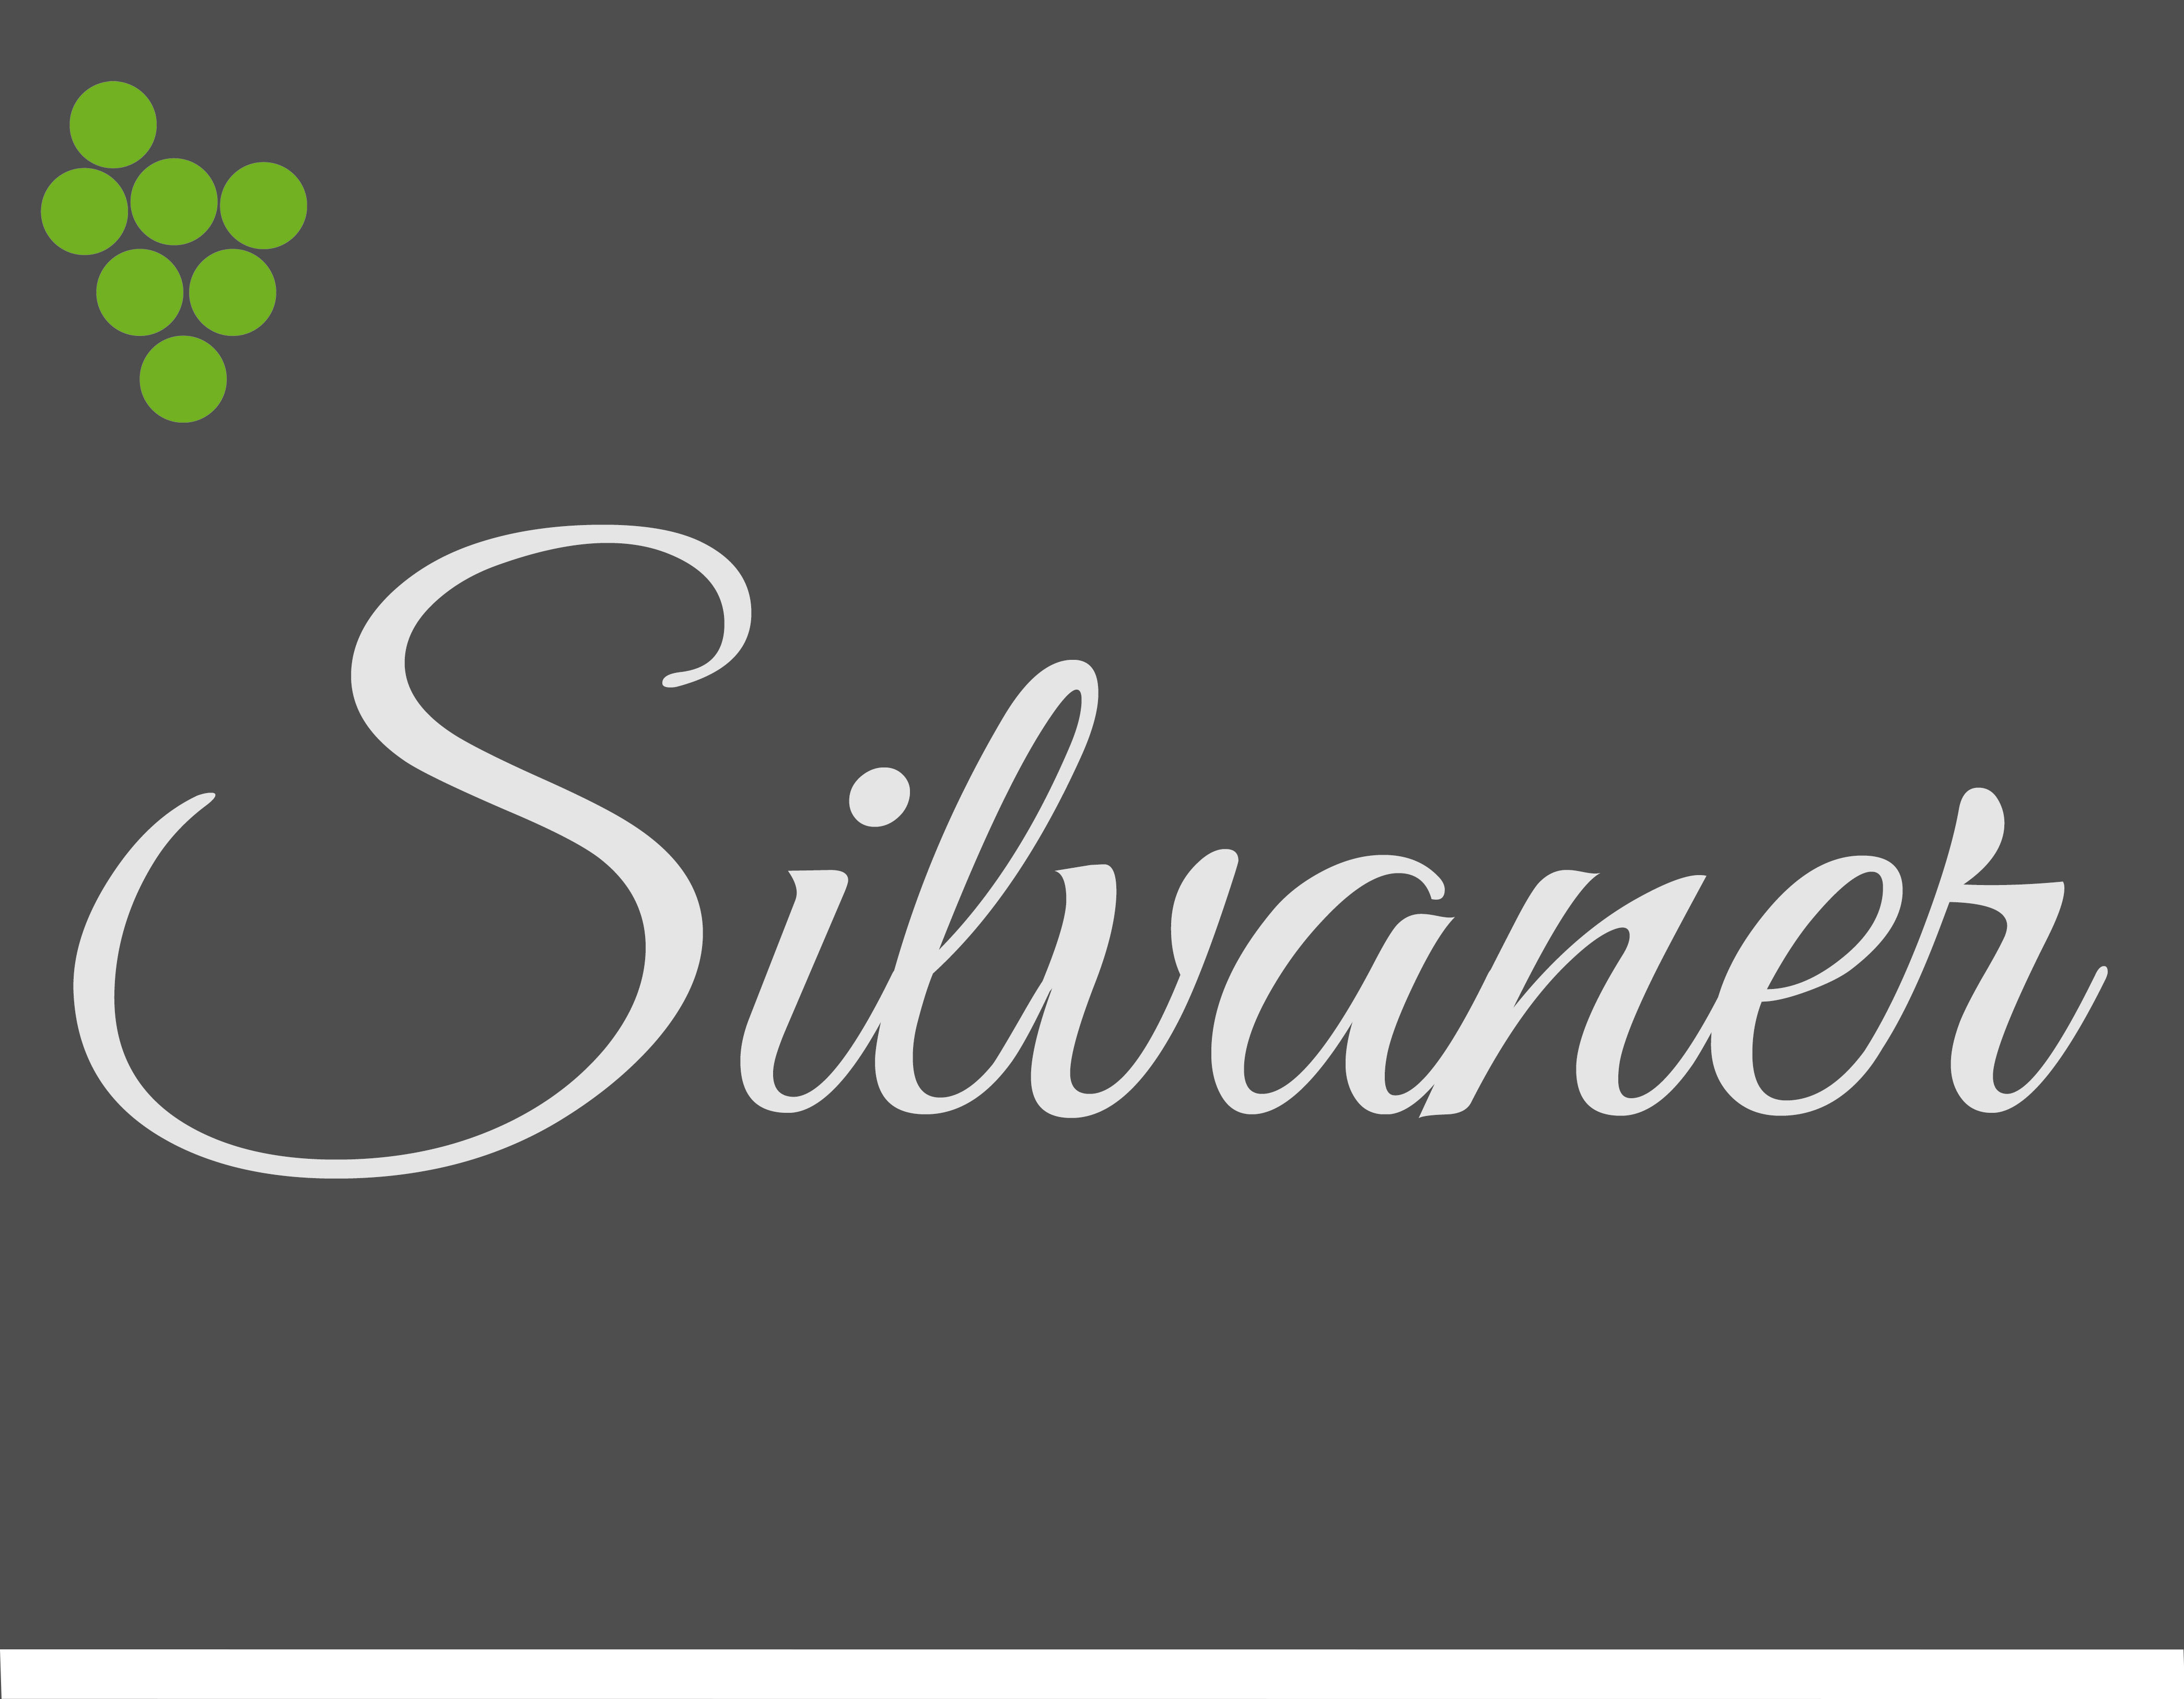 Silvaner